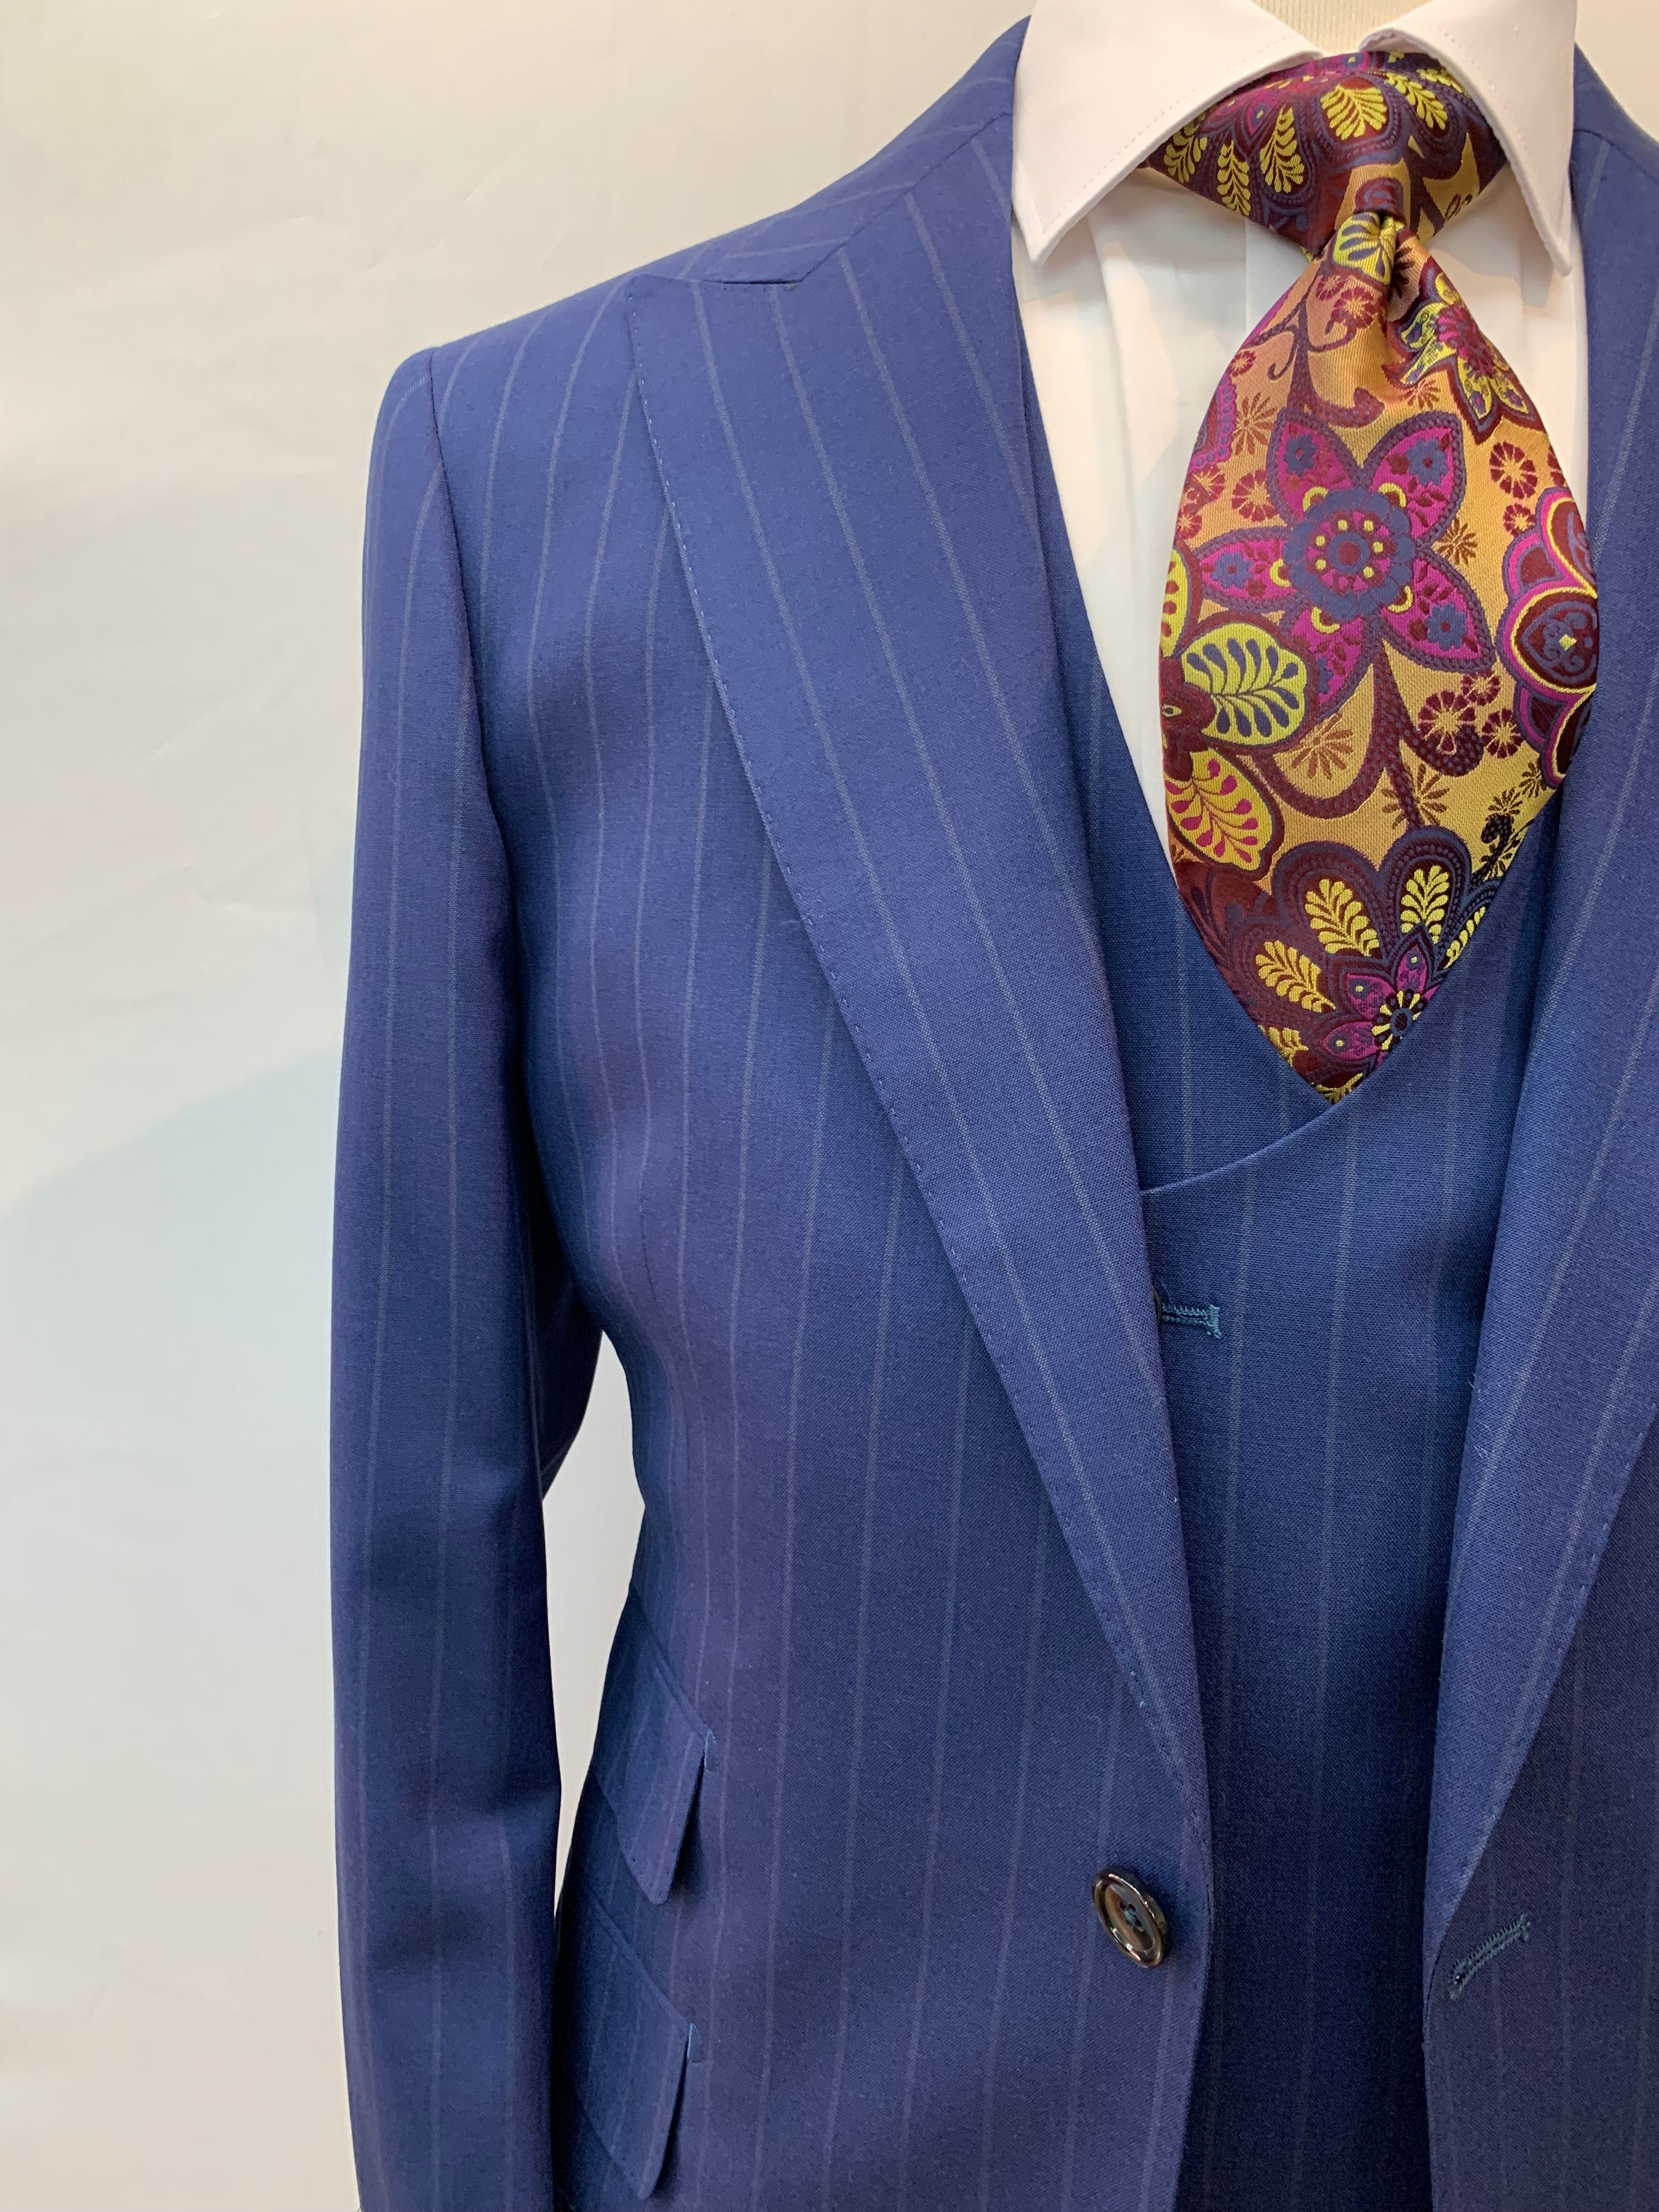 Tiglio Blue Pinstripe 3pc Suit